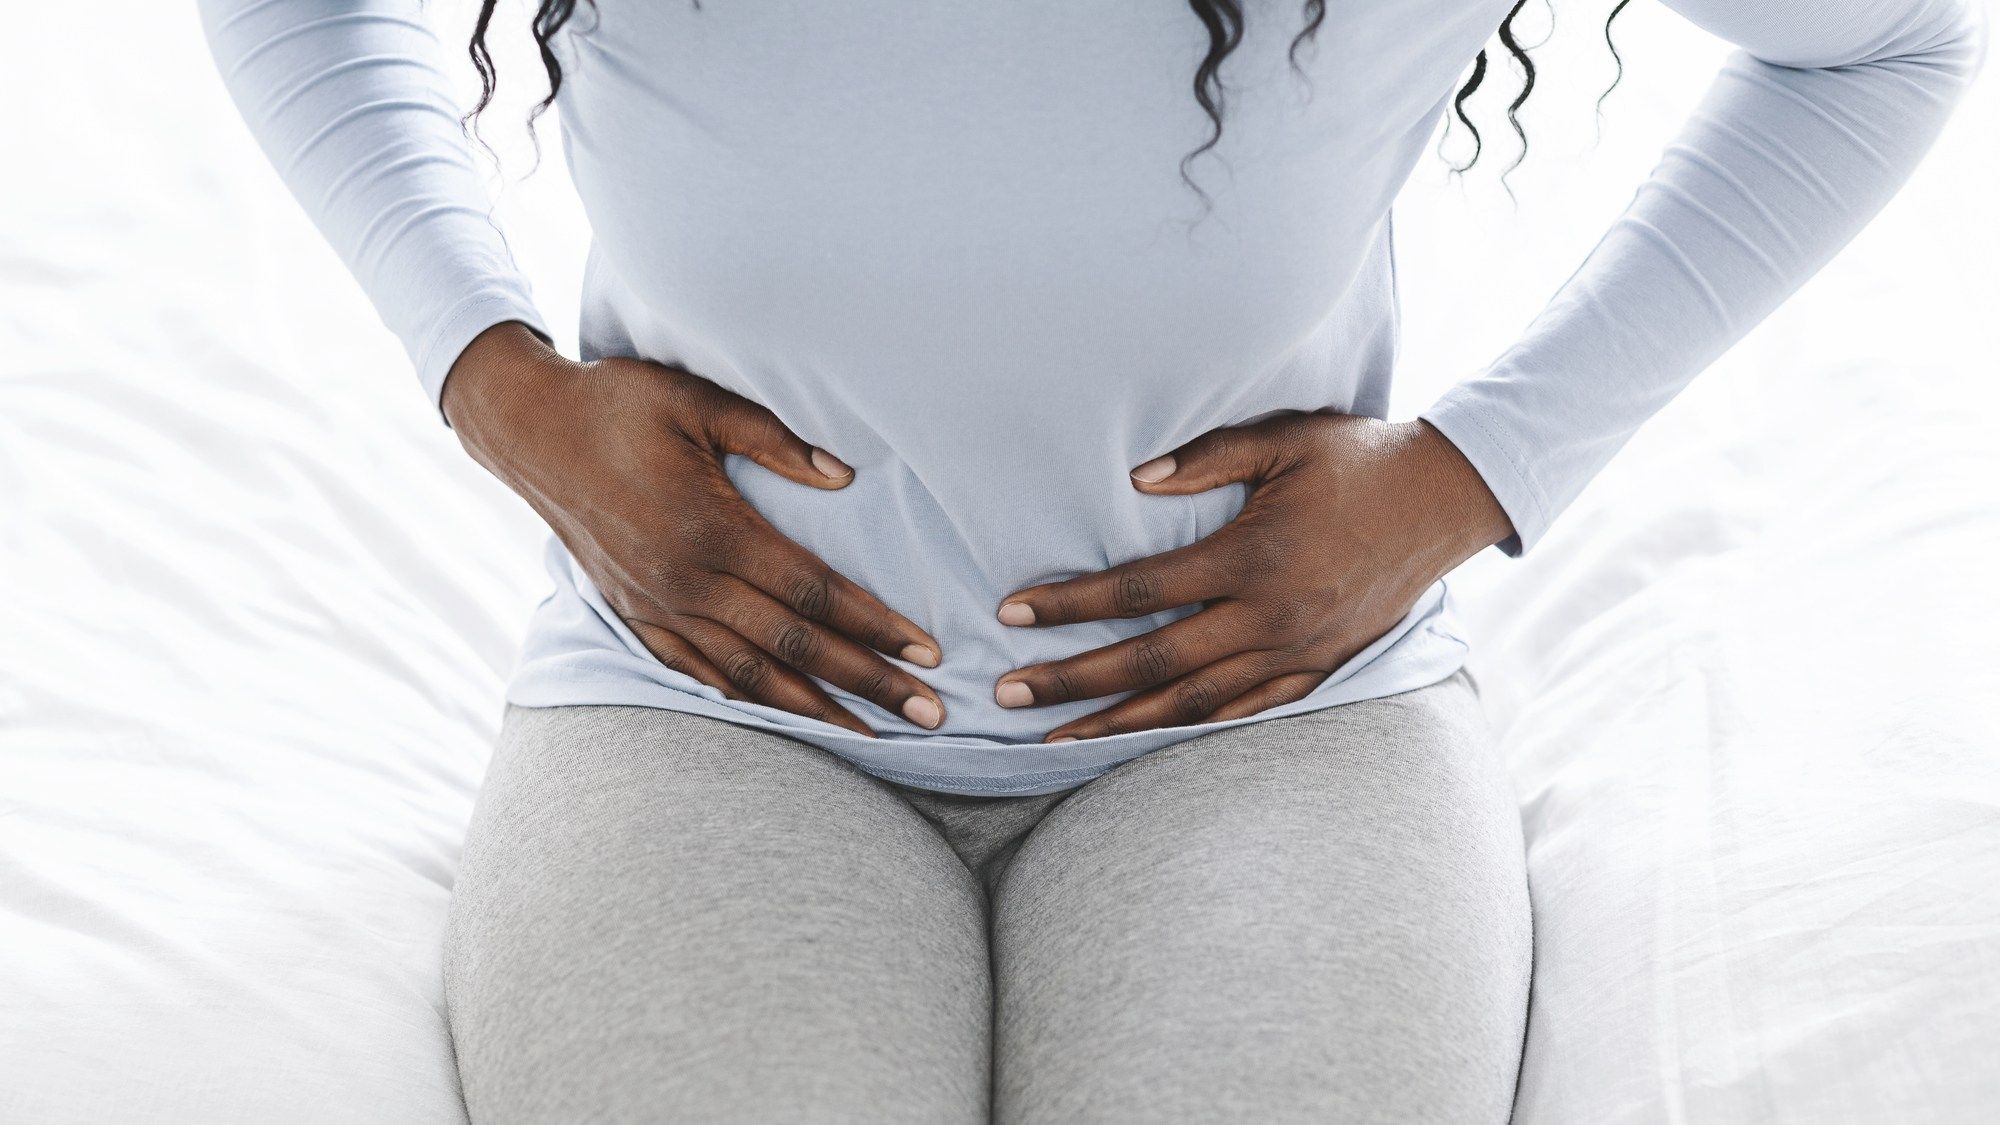 Woman having abdominal pain - BSC Transvaginal Mesh Settlement - Boston Scientific